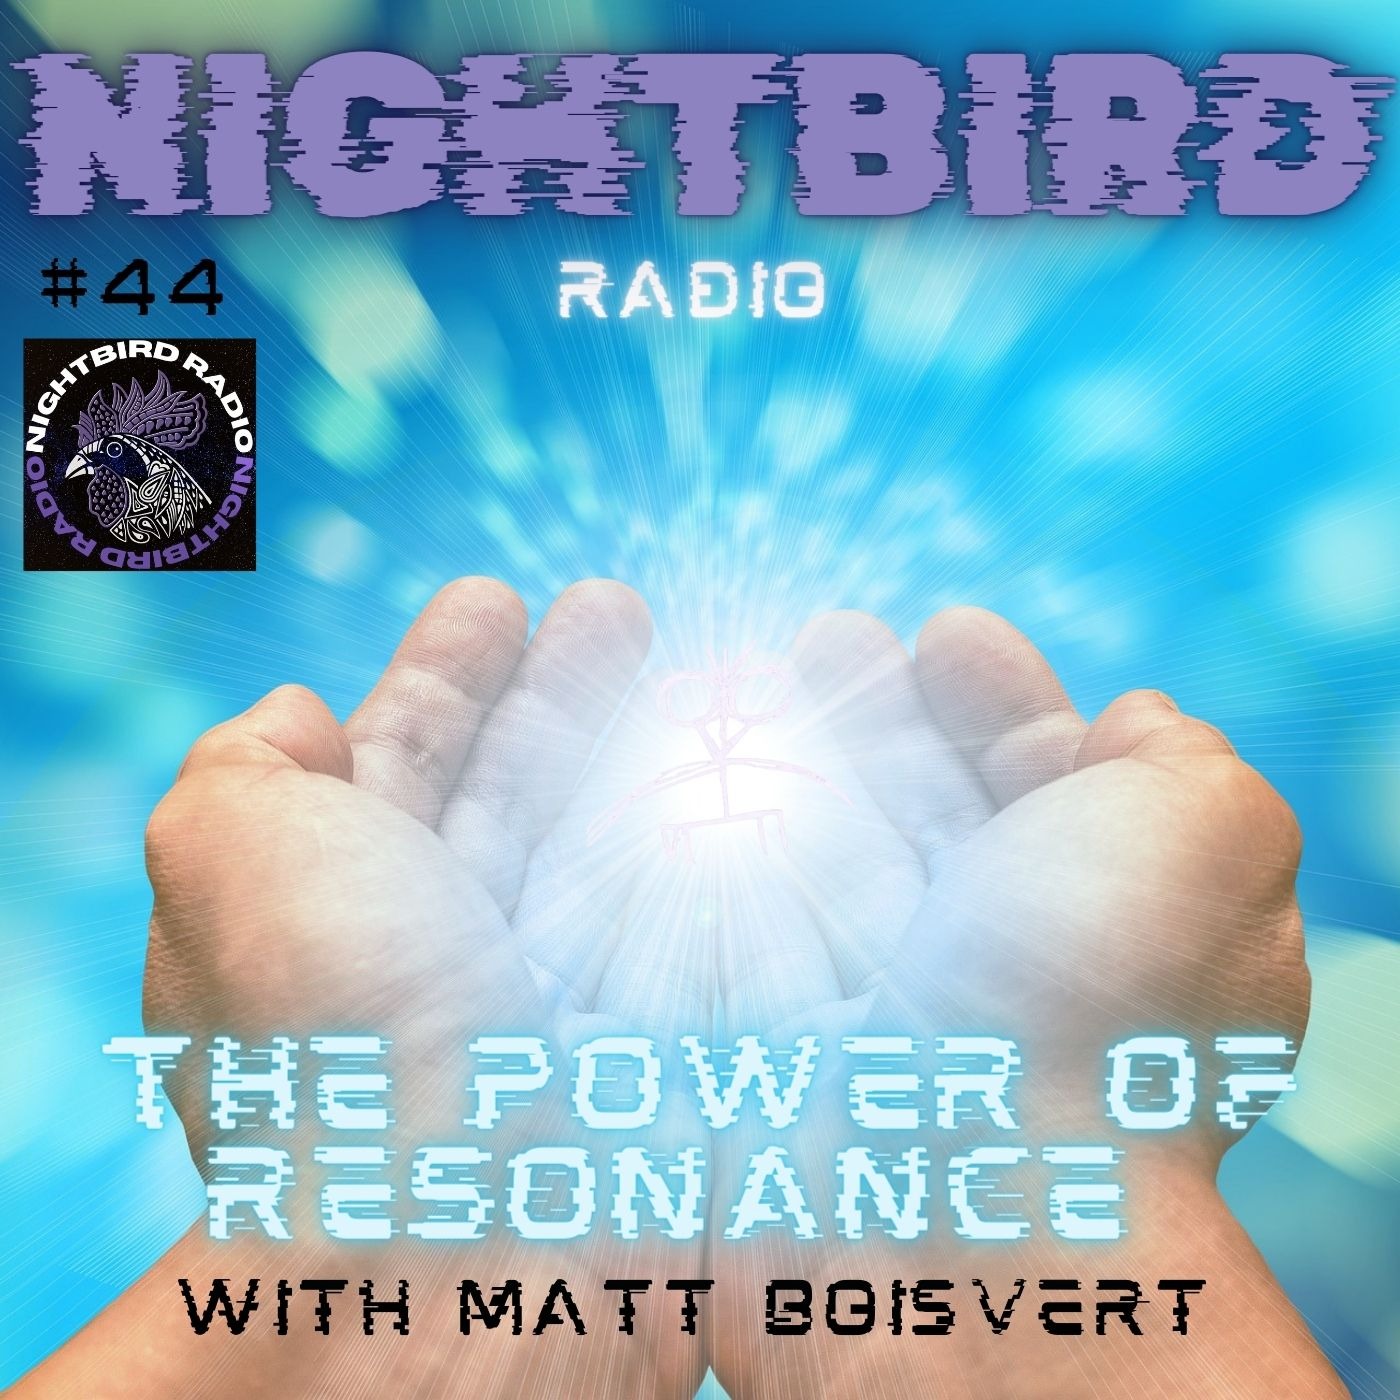 The Power of Resonance with Matt Boisvert